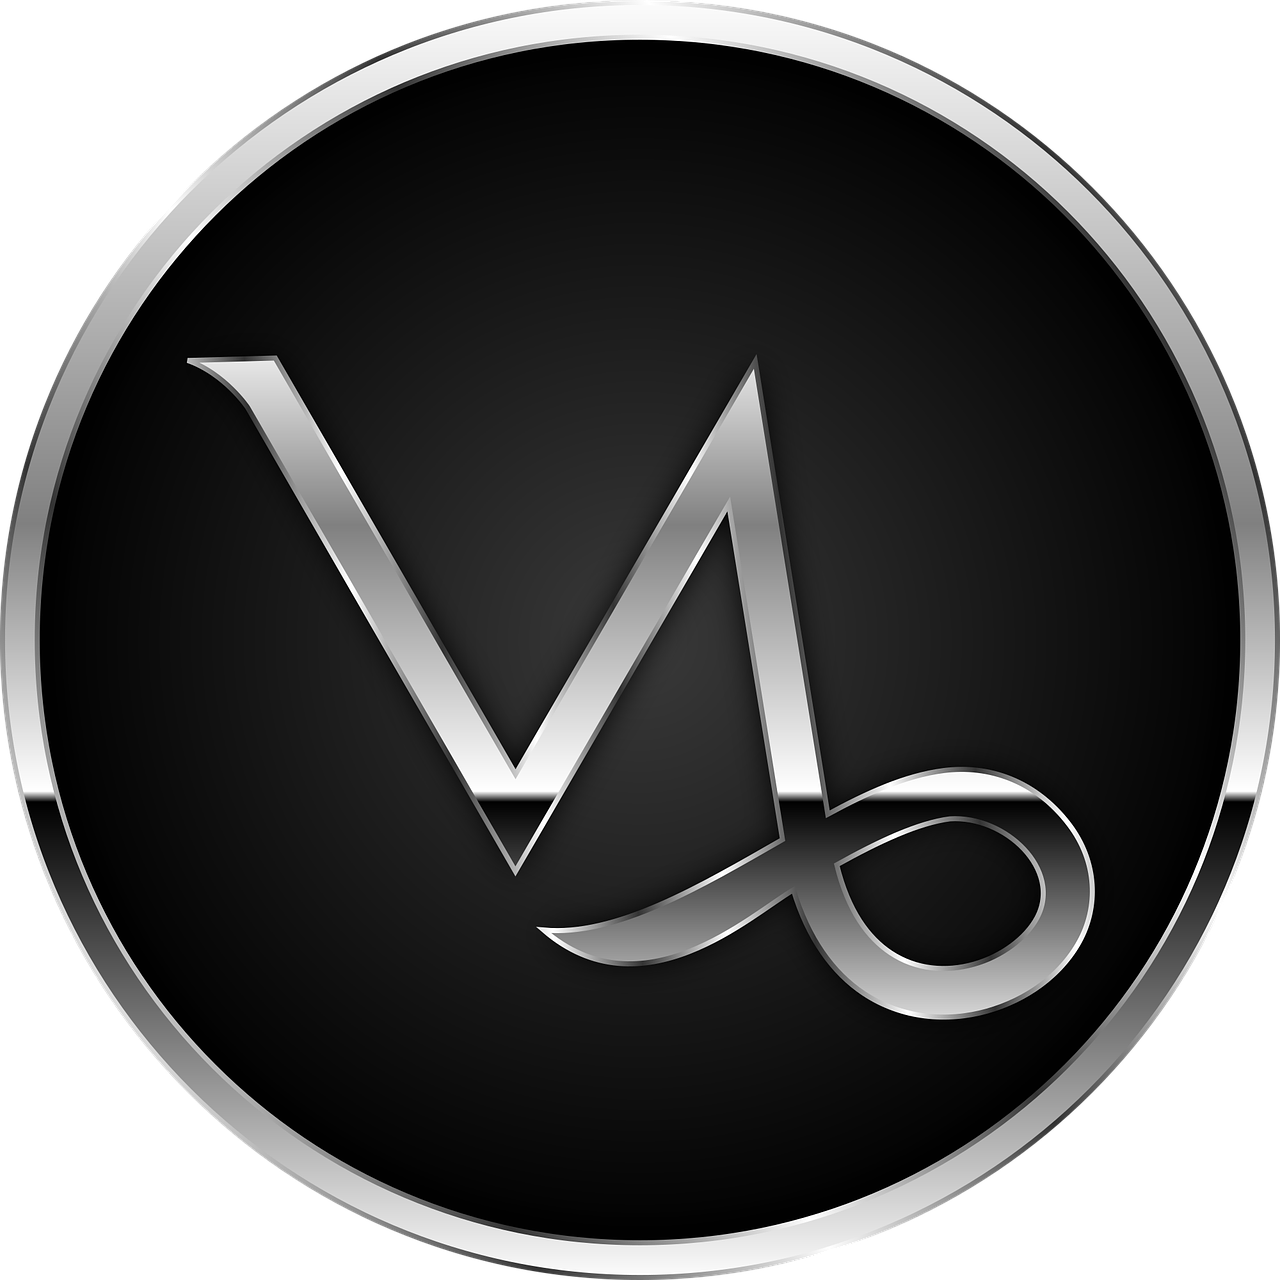 a silver letter m on a black background, a digital rendering, by Mirabello Cavalori, tumblr, art nouveau, venus planet symbol, black metal band logo, v 8 k, with merchant logo